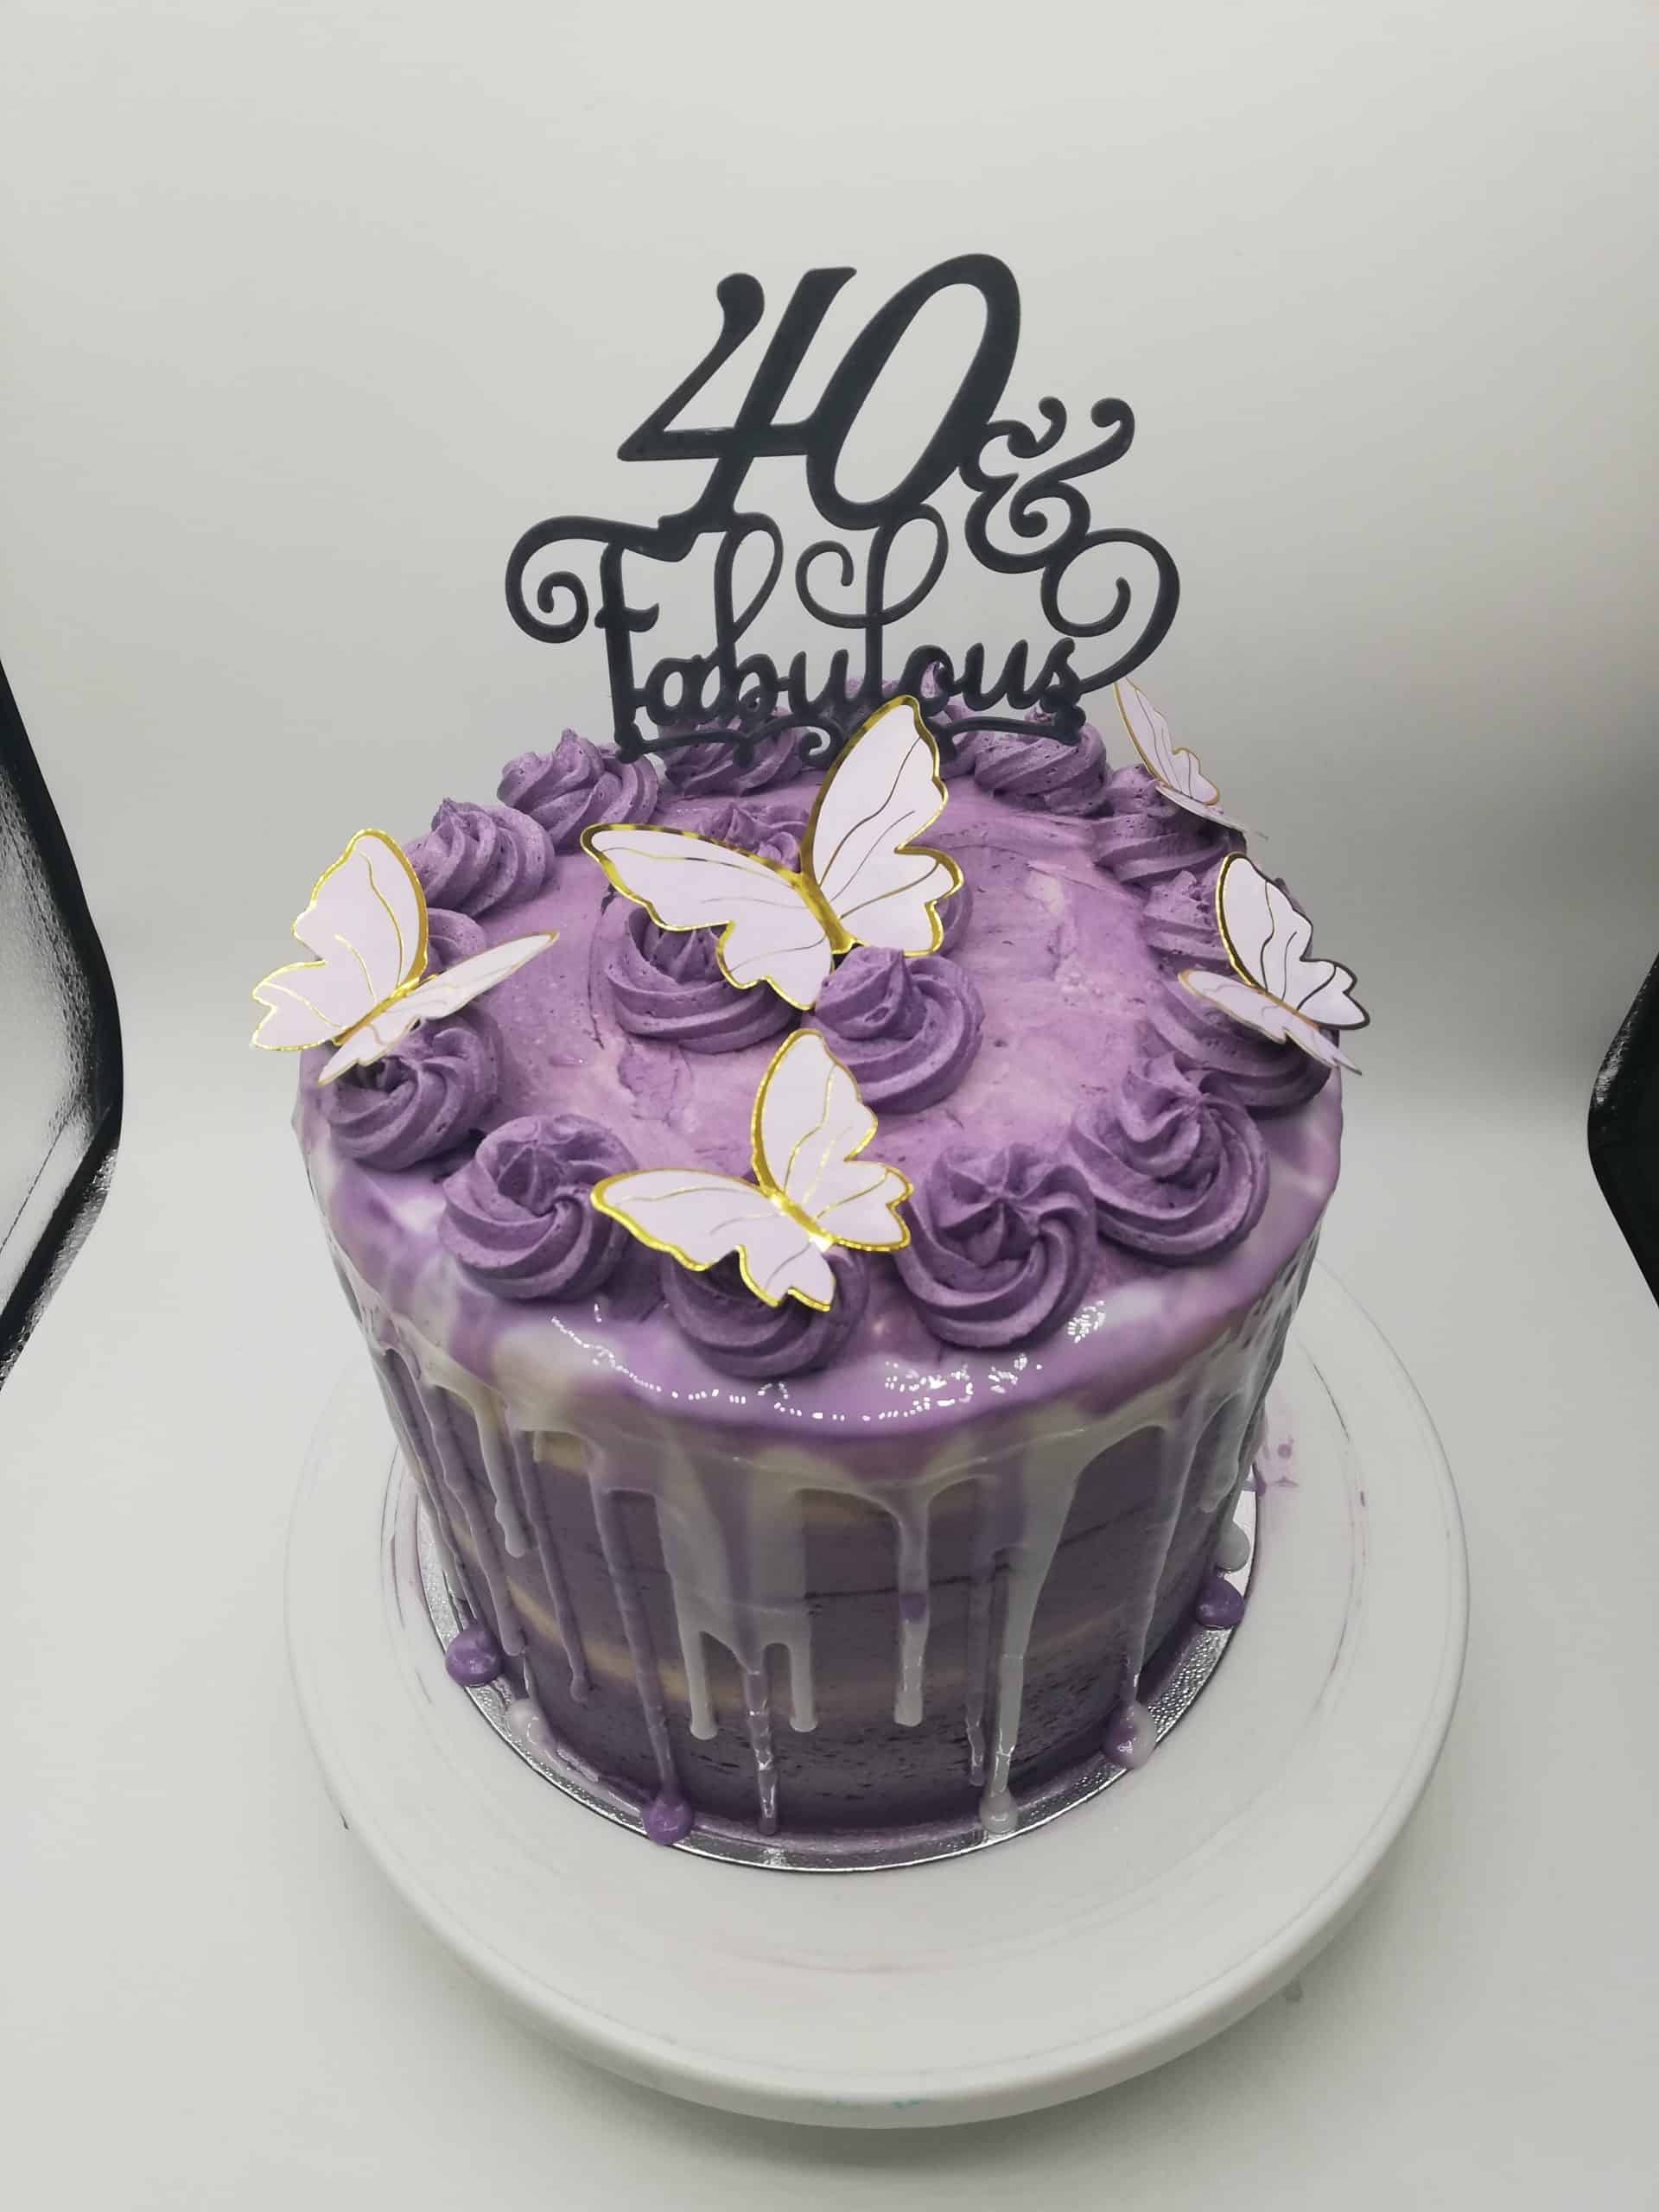 No.40 Cake | Number birthday cakes, 40th cake, 40th birthday cakes